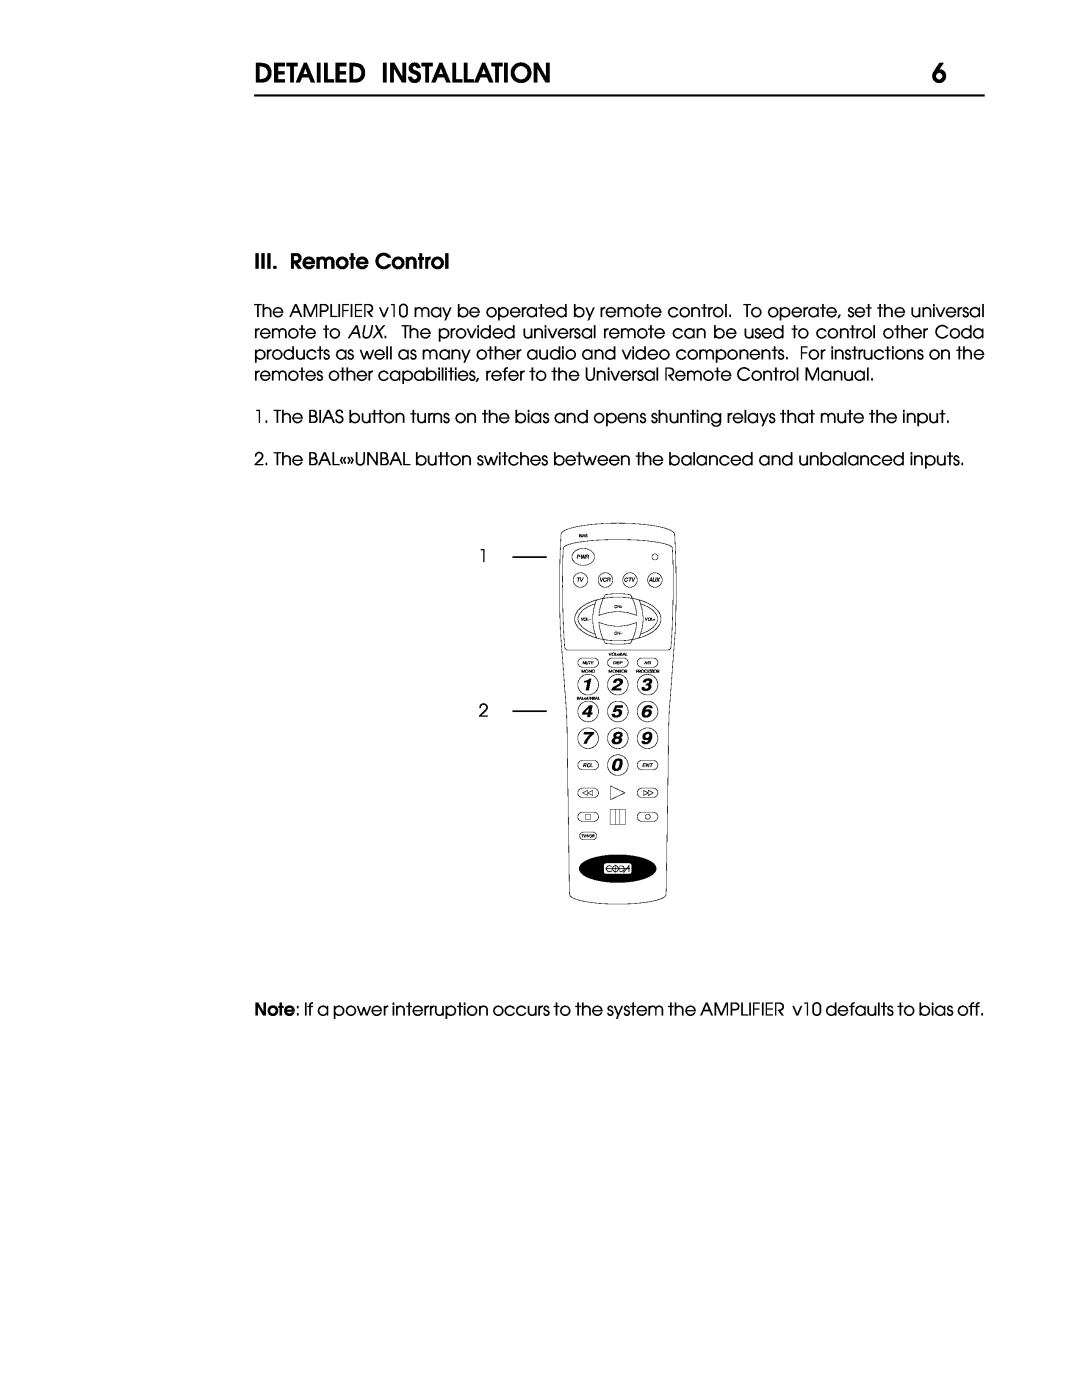 Coda V10 operation manual Detailed Installation, III. Remote Control 